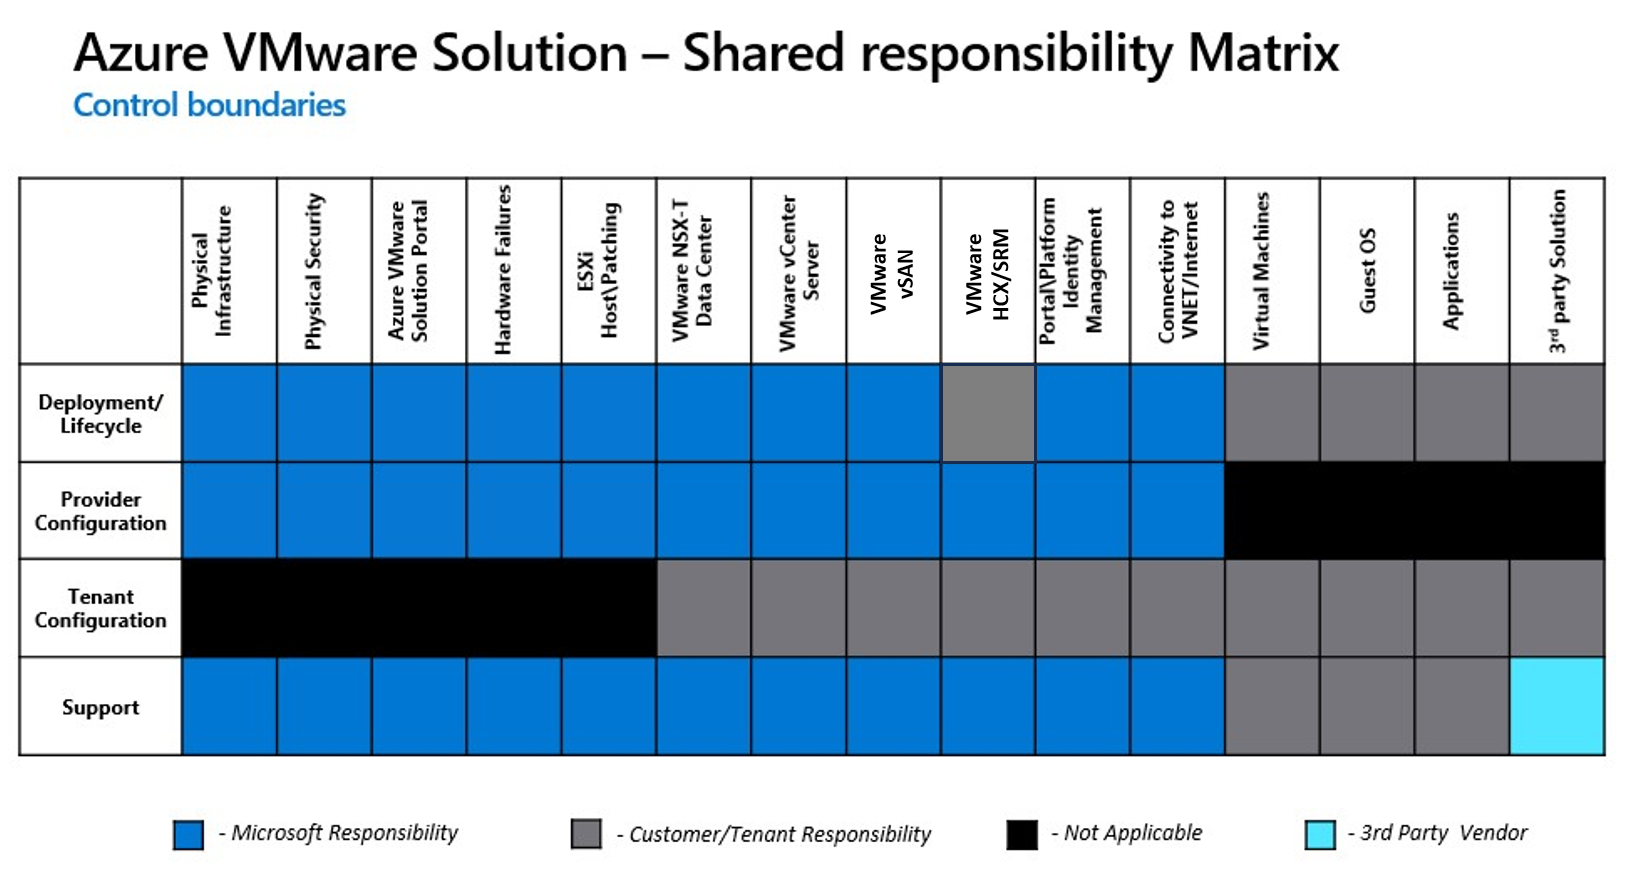 Screenshot of the high-level shared responsibility matrix for Azure VMware Solution.